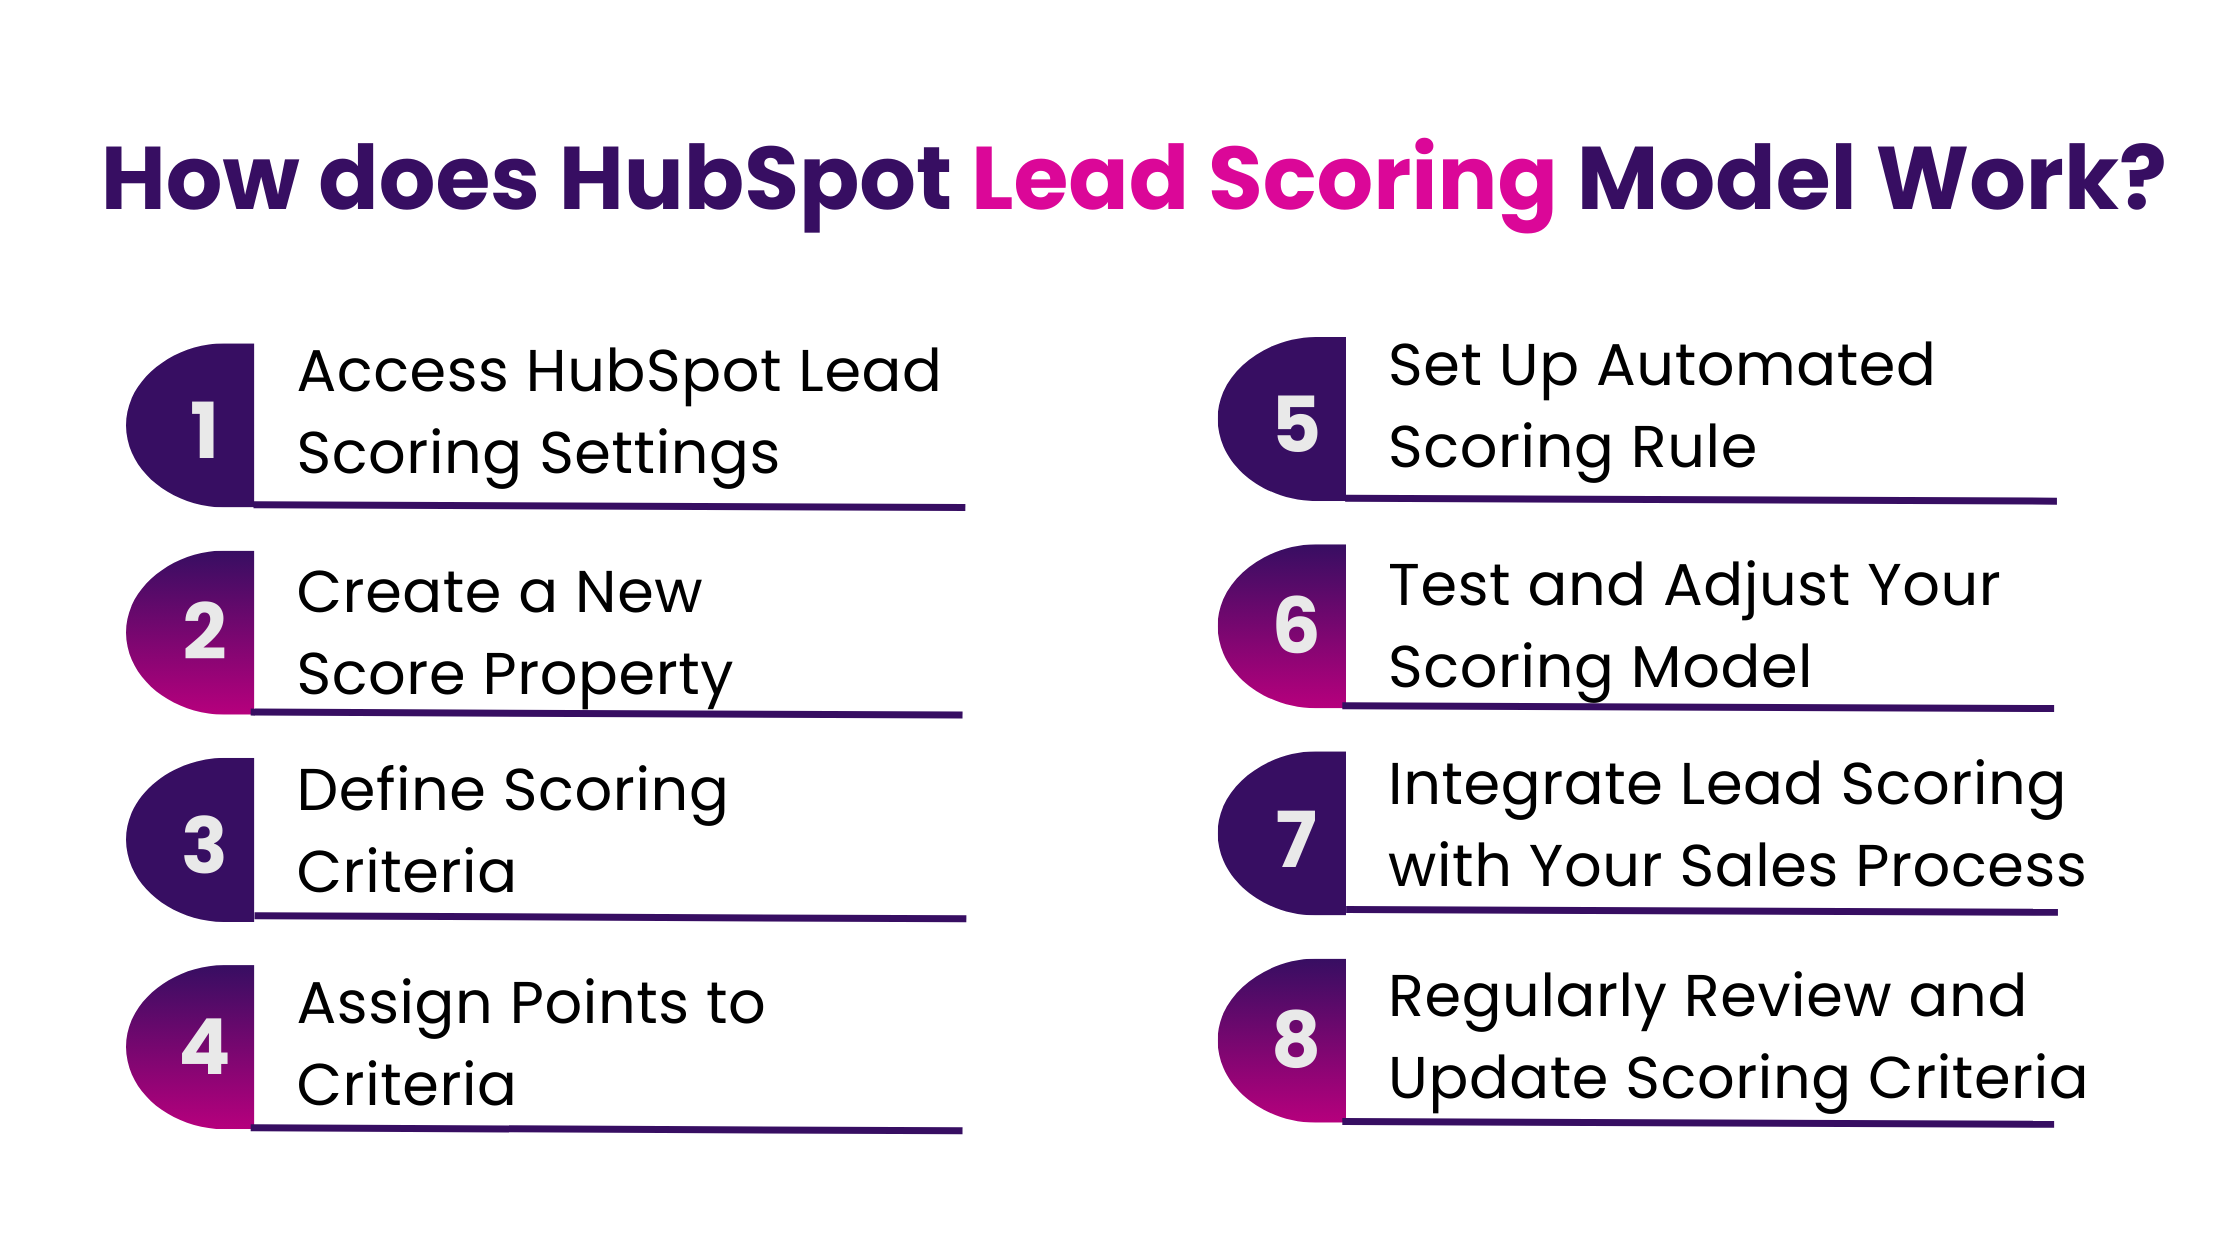 How does HubSpot Lead Scoring Model Work